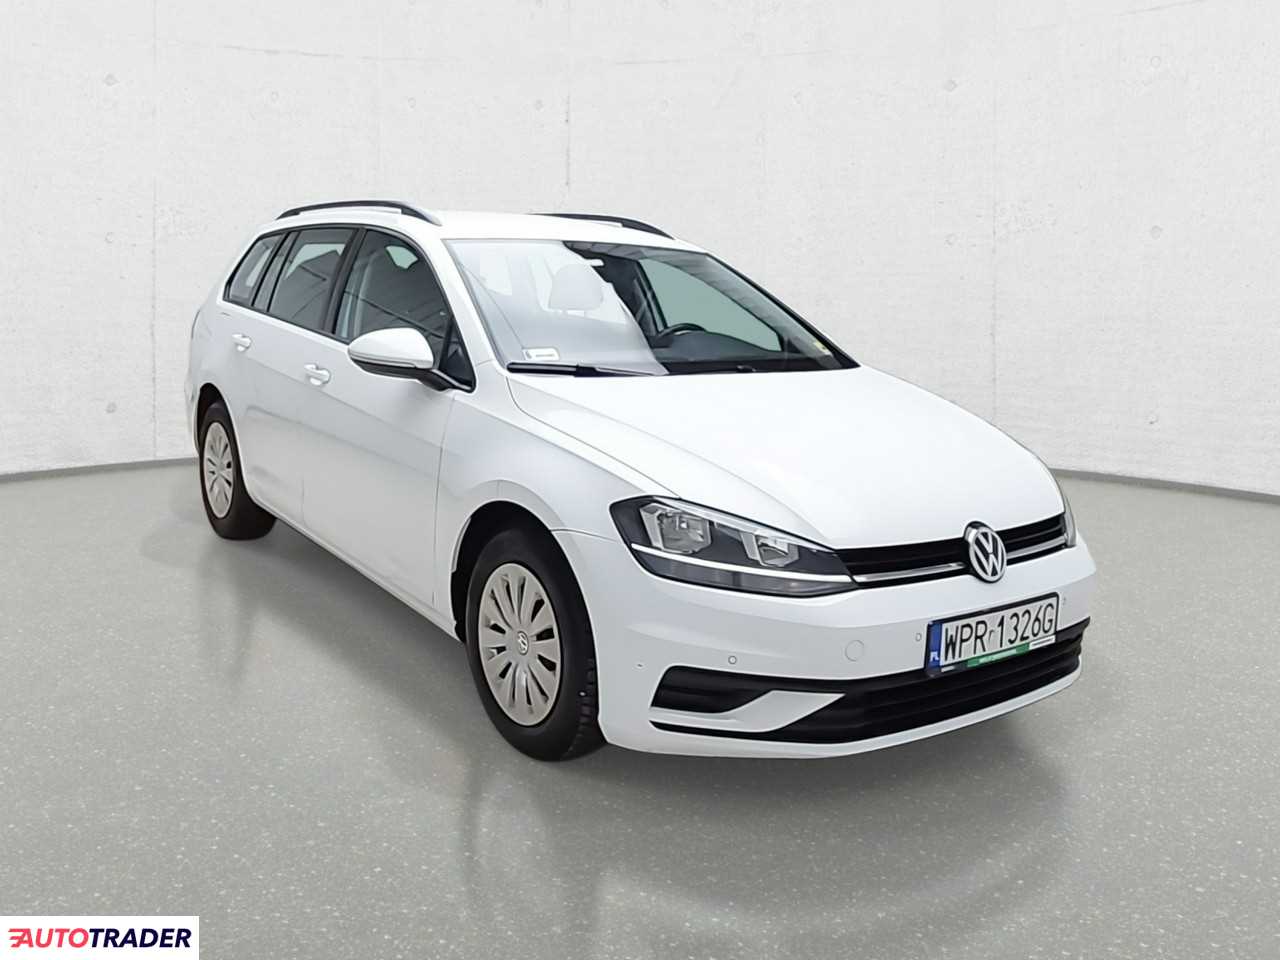 Volkswagen Golf 2019 1.6 116 KM